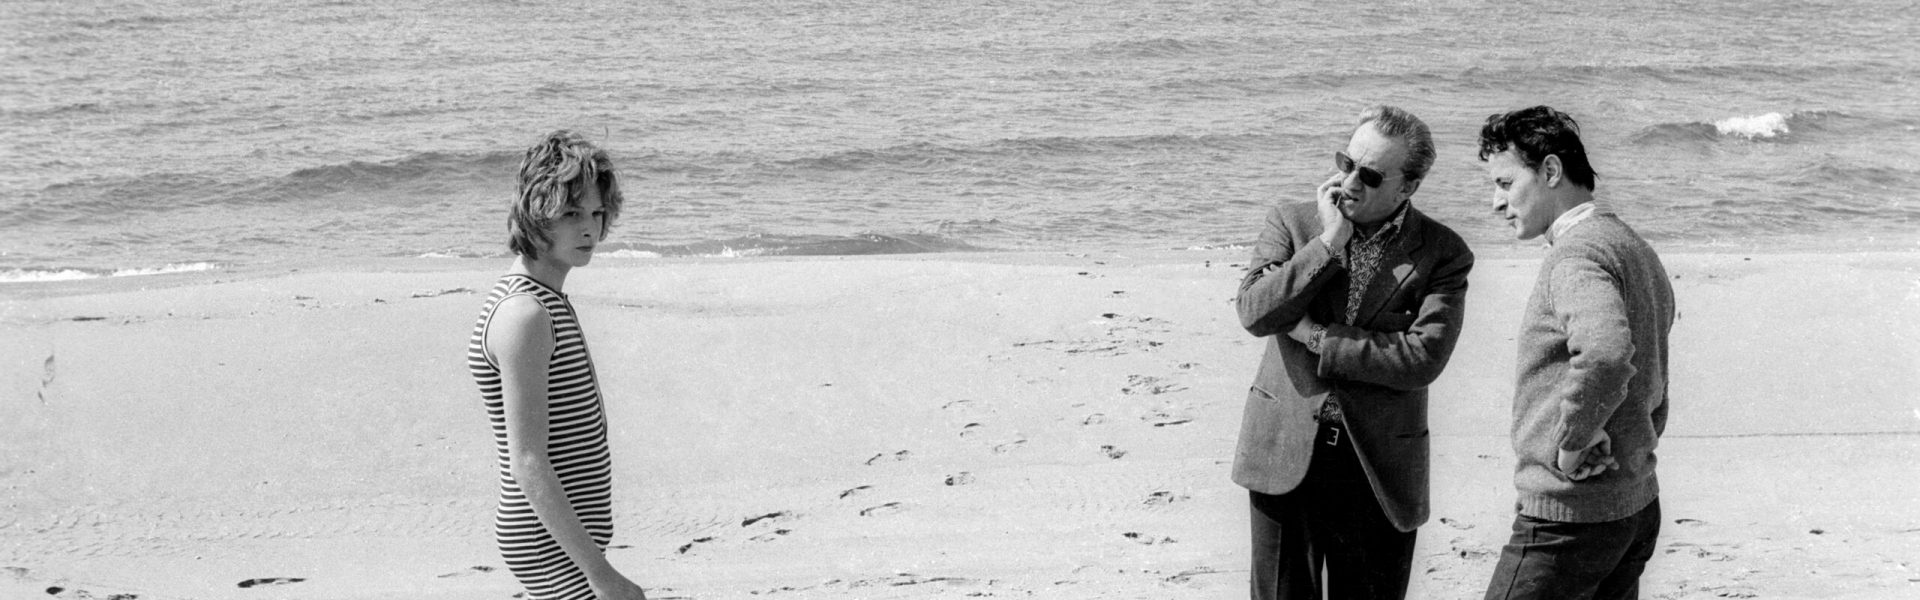 Bjorn_and_Visconti_shooting_Beach_Morte_a_Venezia_Copyright_Mario_Tursi_1970